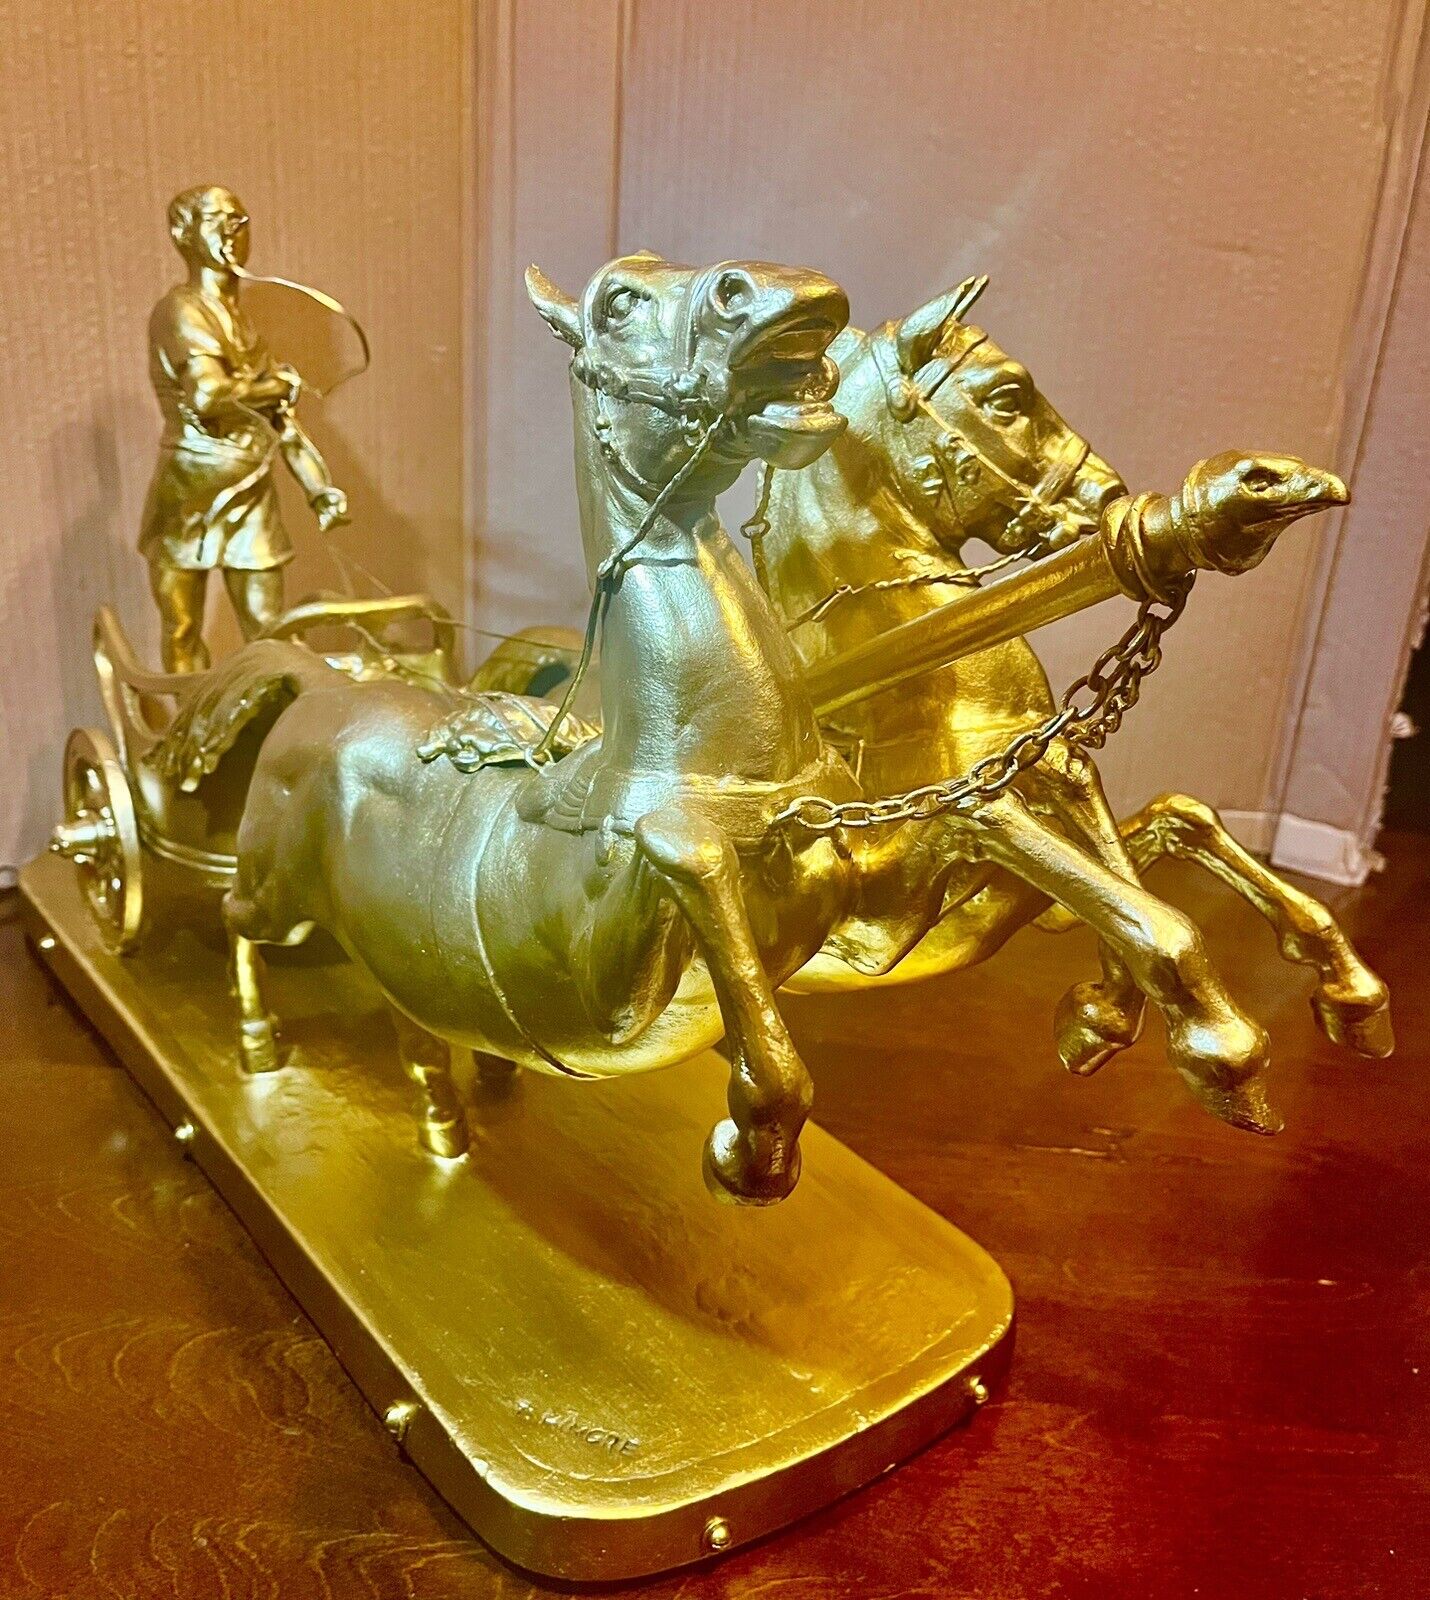 1905 Paris France Antique Horse Chariot Racing Sculpture 1905 Signed “T. HINGRE